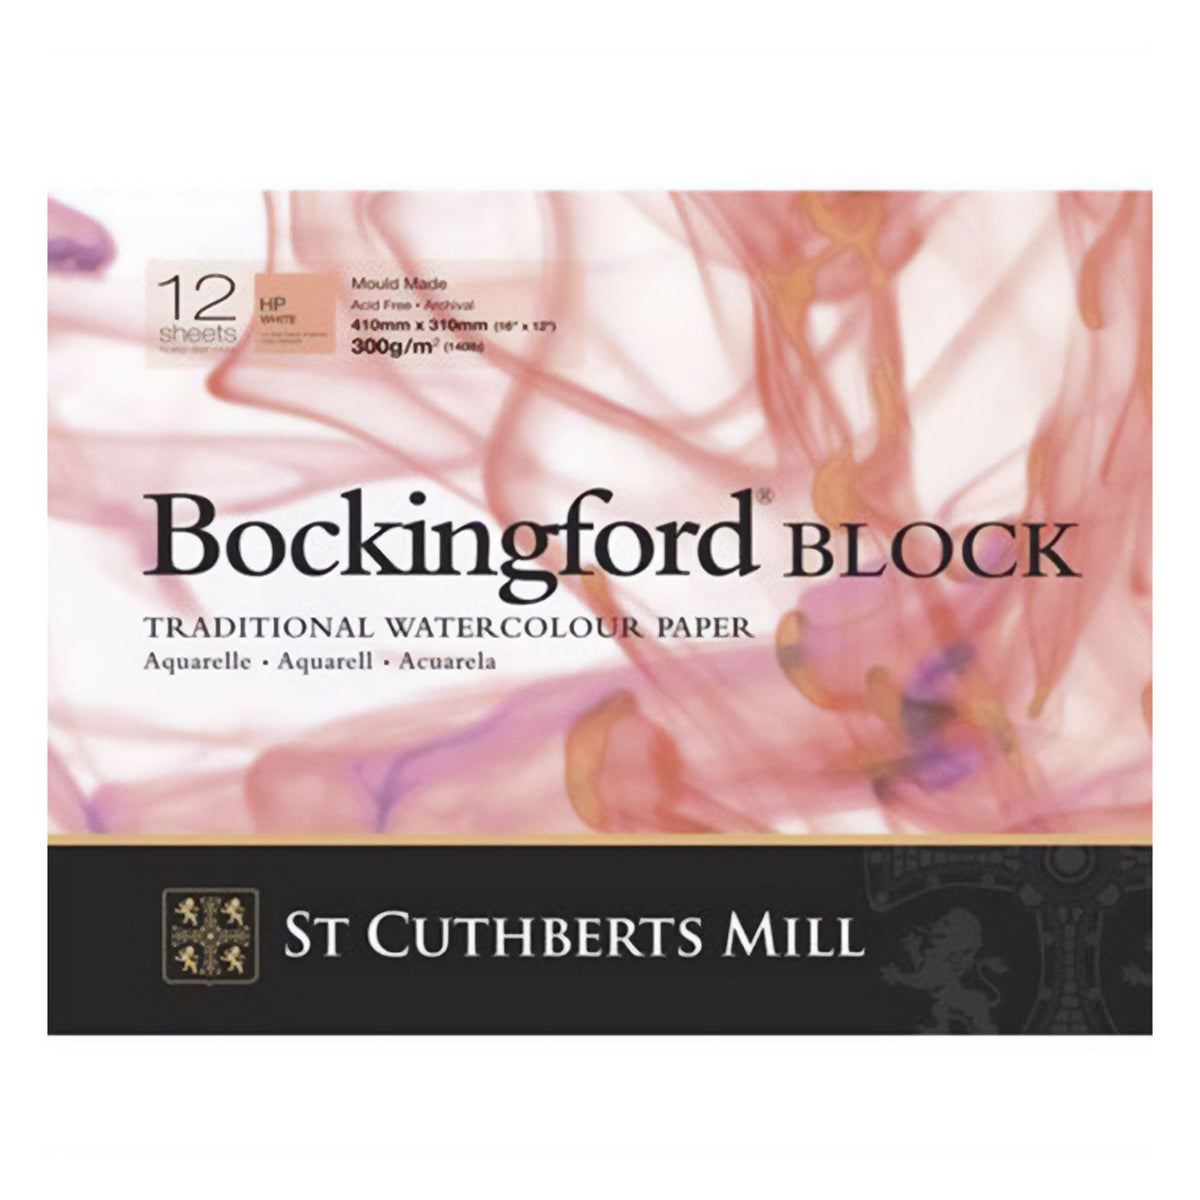 Bockingford Watercolour Blocks 140lbs / 300gsm HOT PRESS